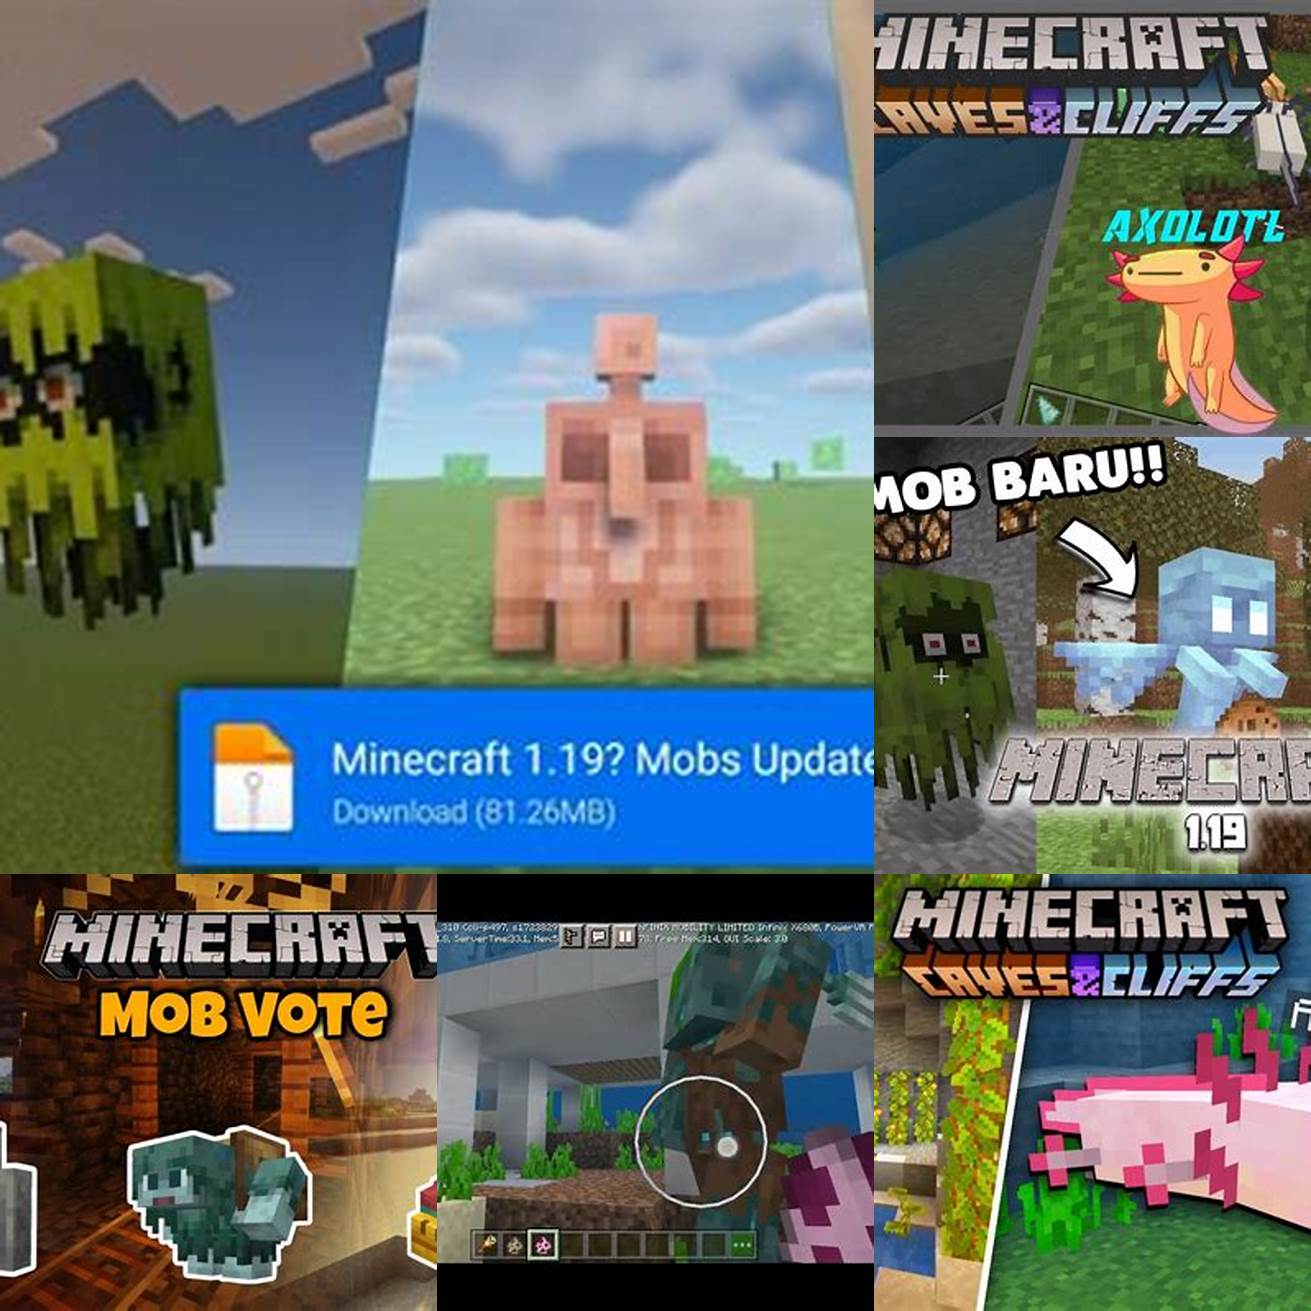 3 Mob Baru - Terdapat beberapa mob baru yang ditambahkan ke dalam Minecraft 118 termasuk Axolotl dan Glow Squid